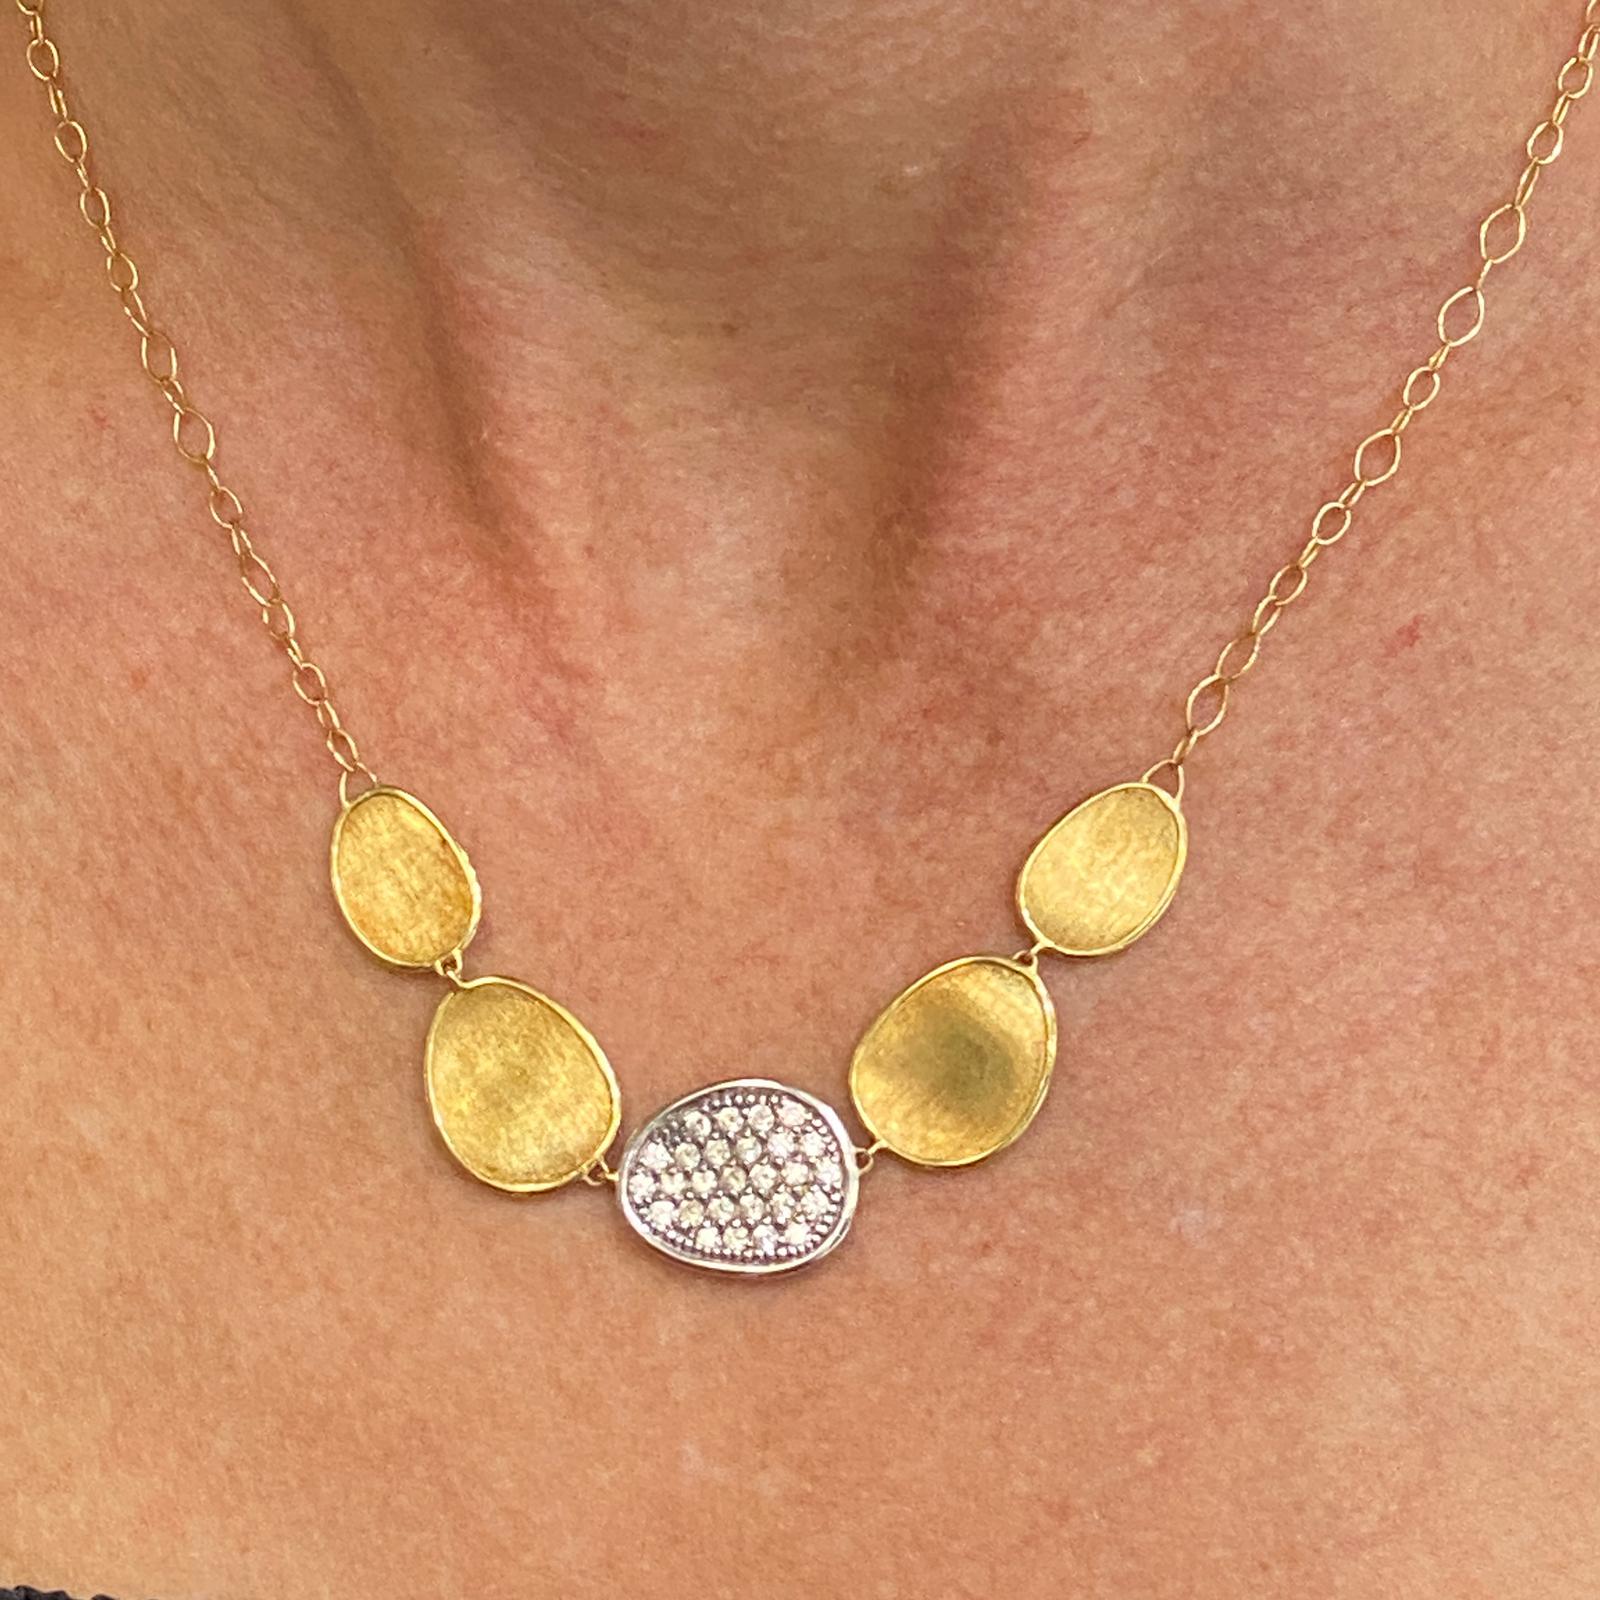 Modern MarCo Bicego Lunaria Pave Diamond 5 Station Necklace 18 Karat Two-Tone Gold